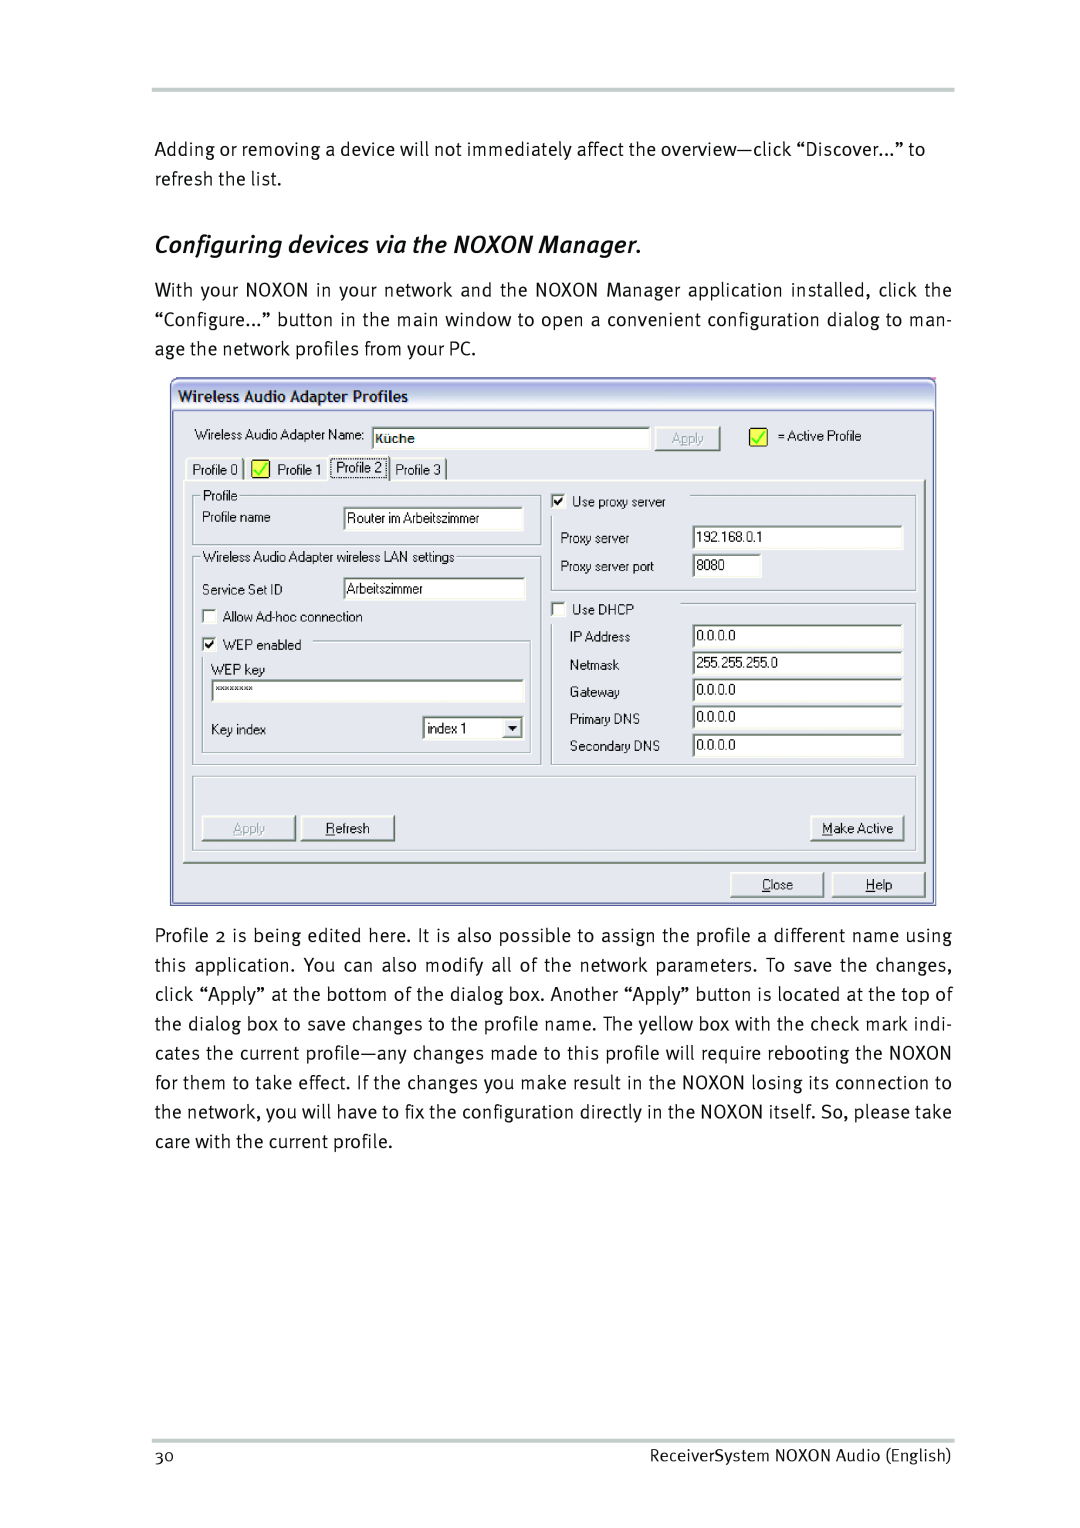 TerraTec Audio manual Configuring devices via the NOXON Manager 